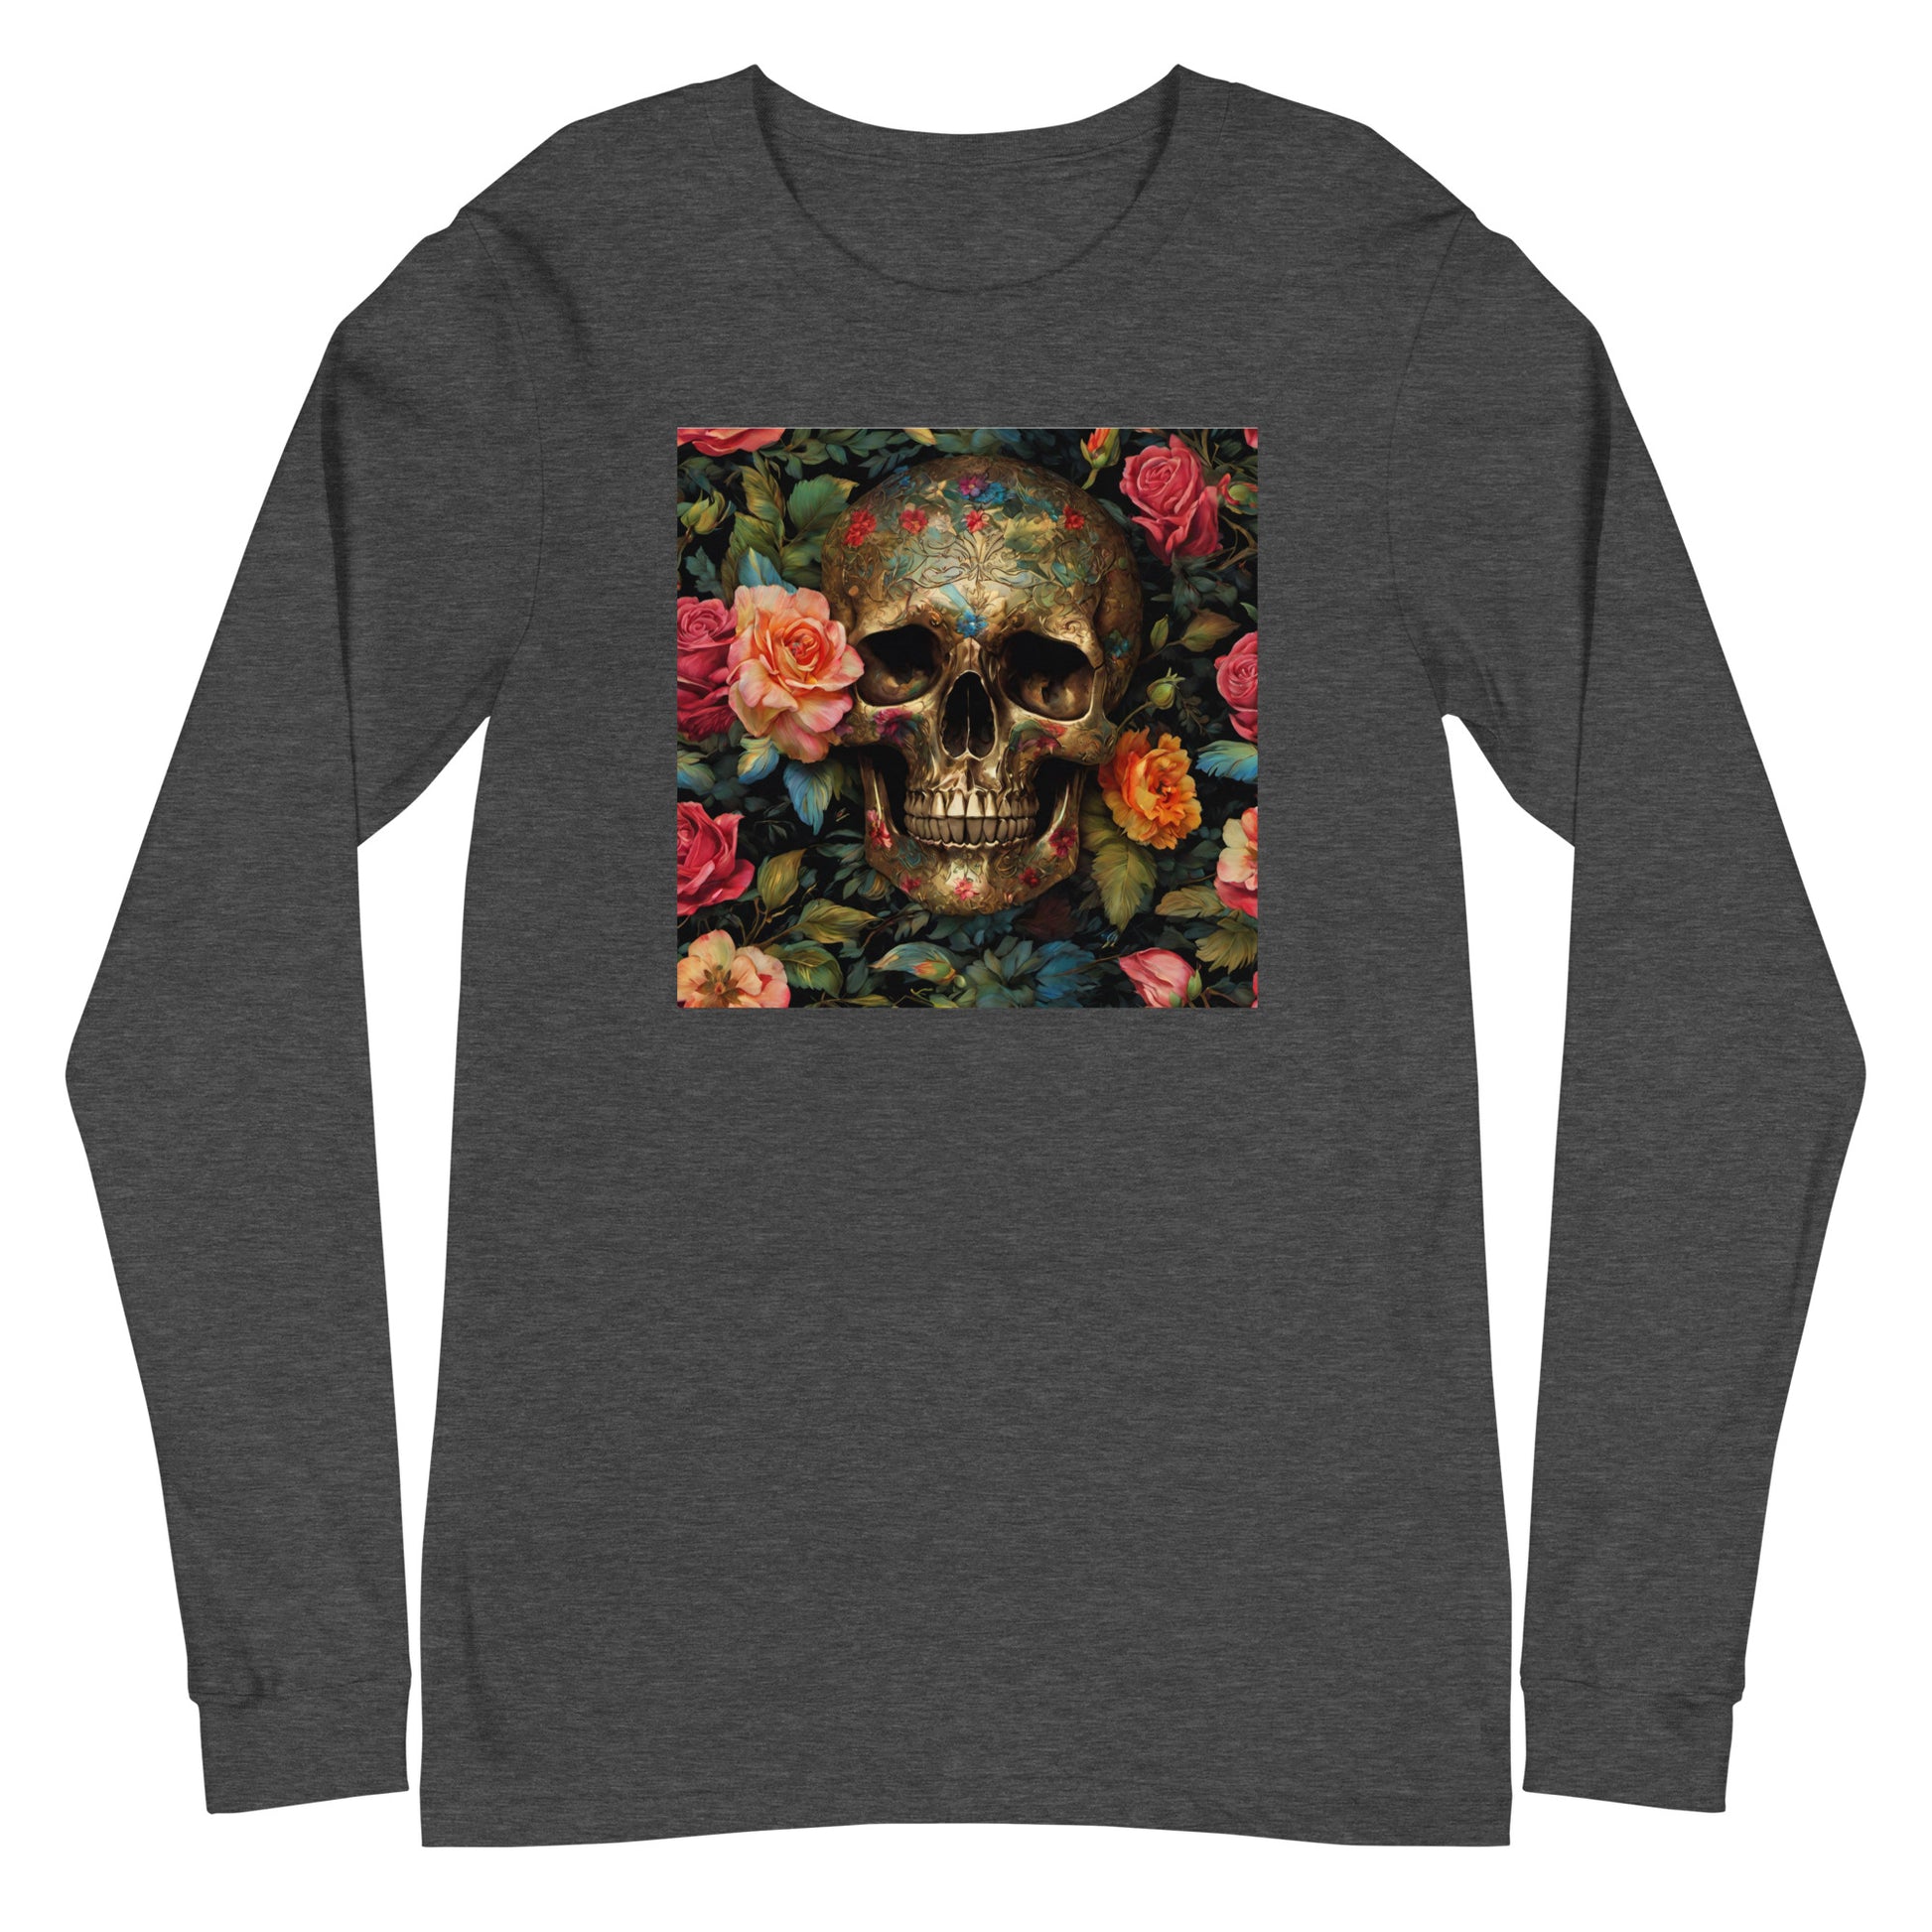 Skull and Roses Graphic Long Sleeve Tee Dark Grey Heather